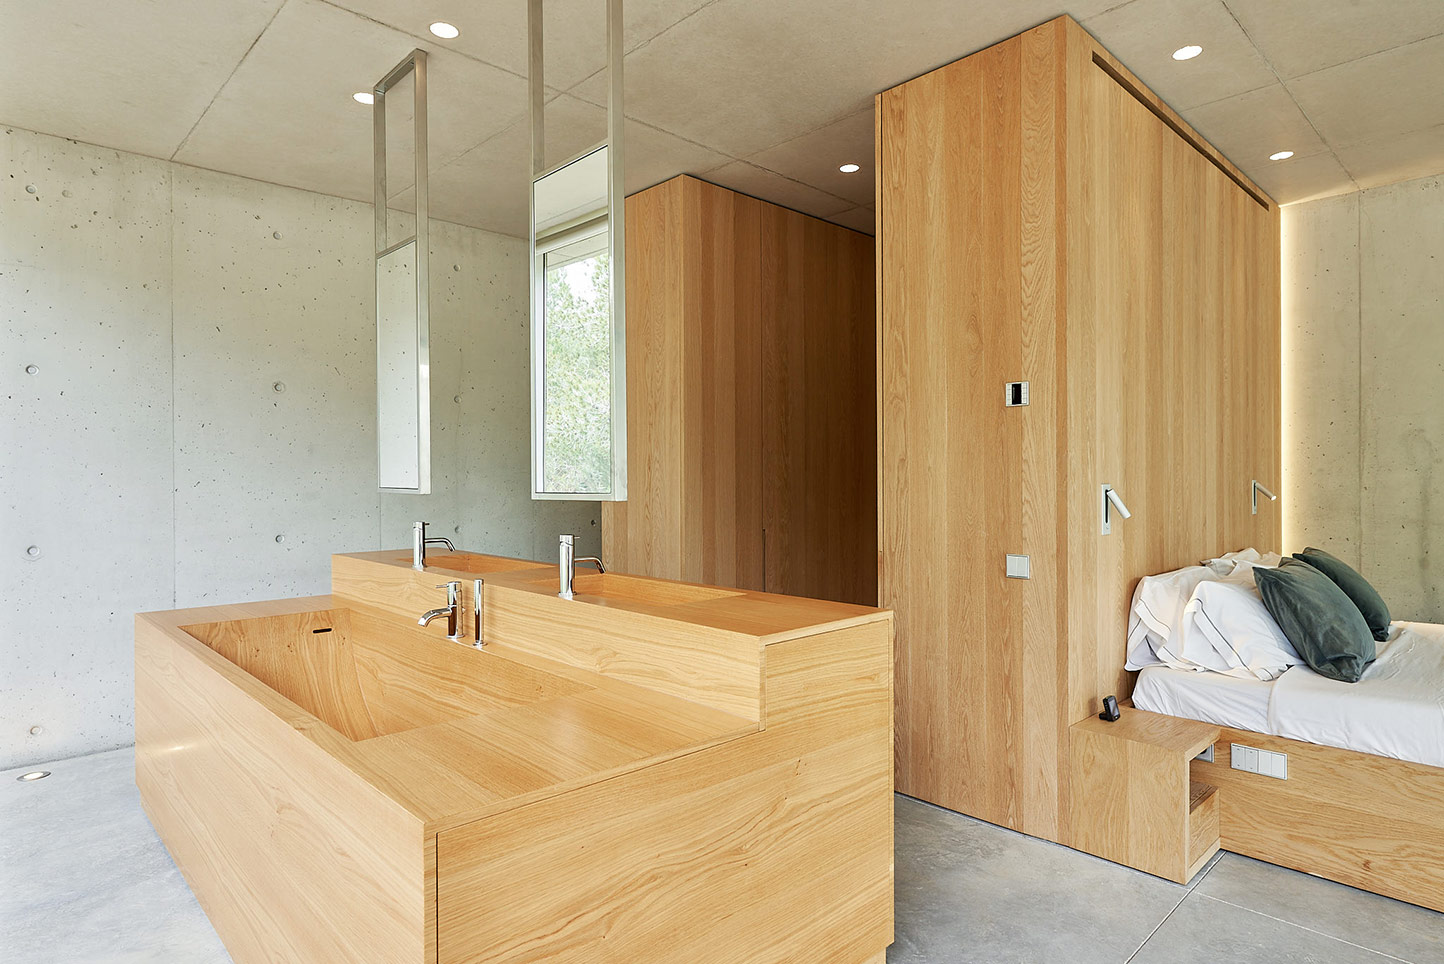 Image no. 2 of Custom wooden bathtub and vanity in Oak - Bathroom Island